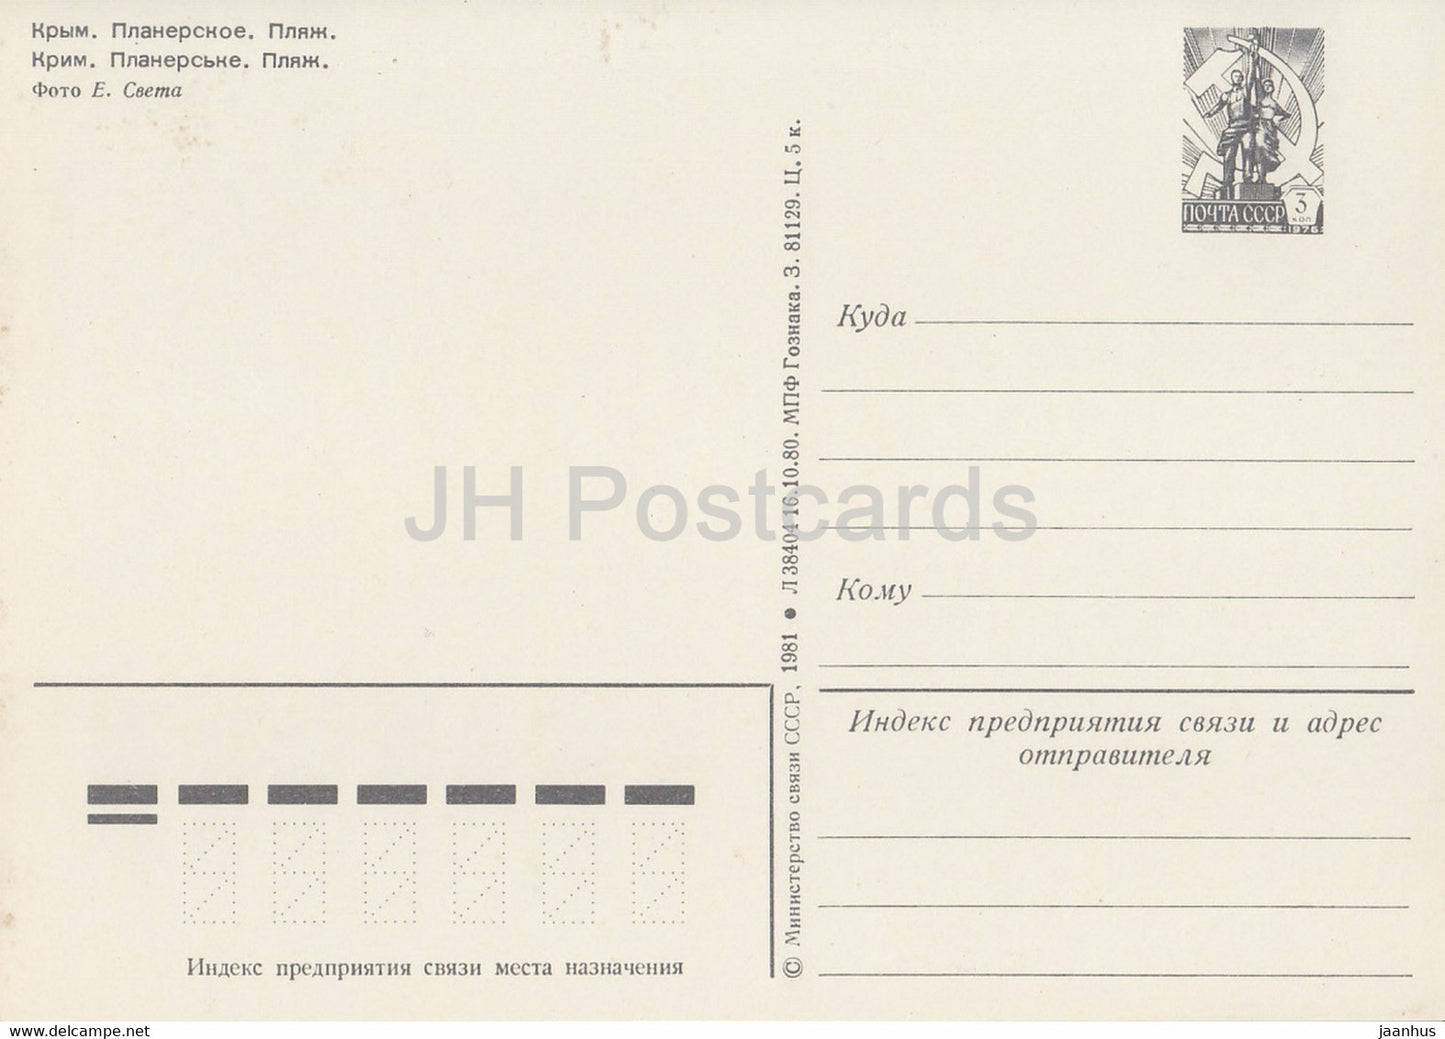 Crimée - Plage de Planerskoe - entier postal - 1981 - Ukraine URSS - inutilisé